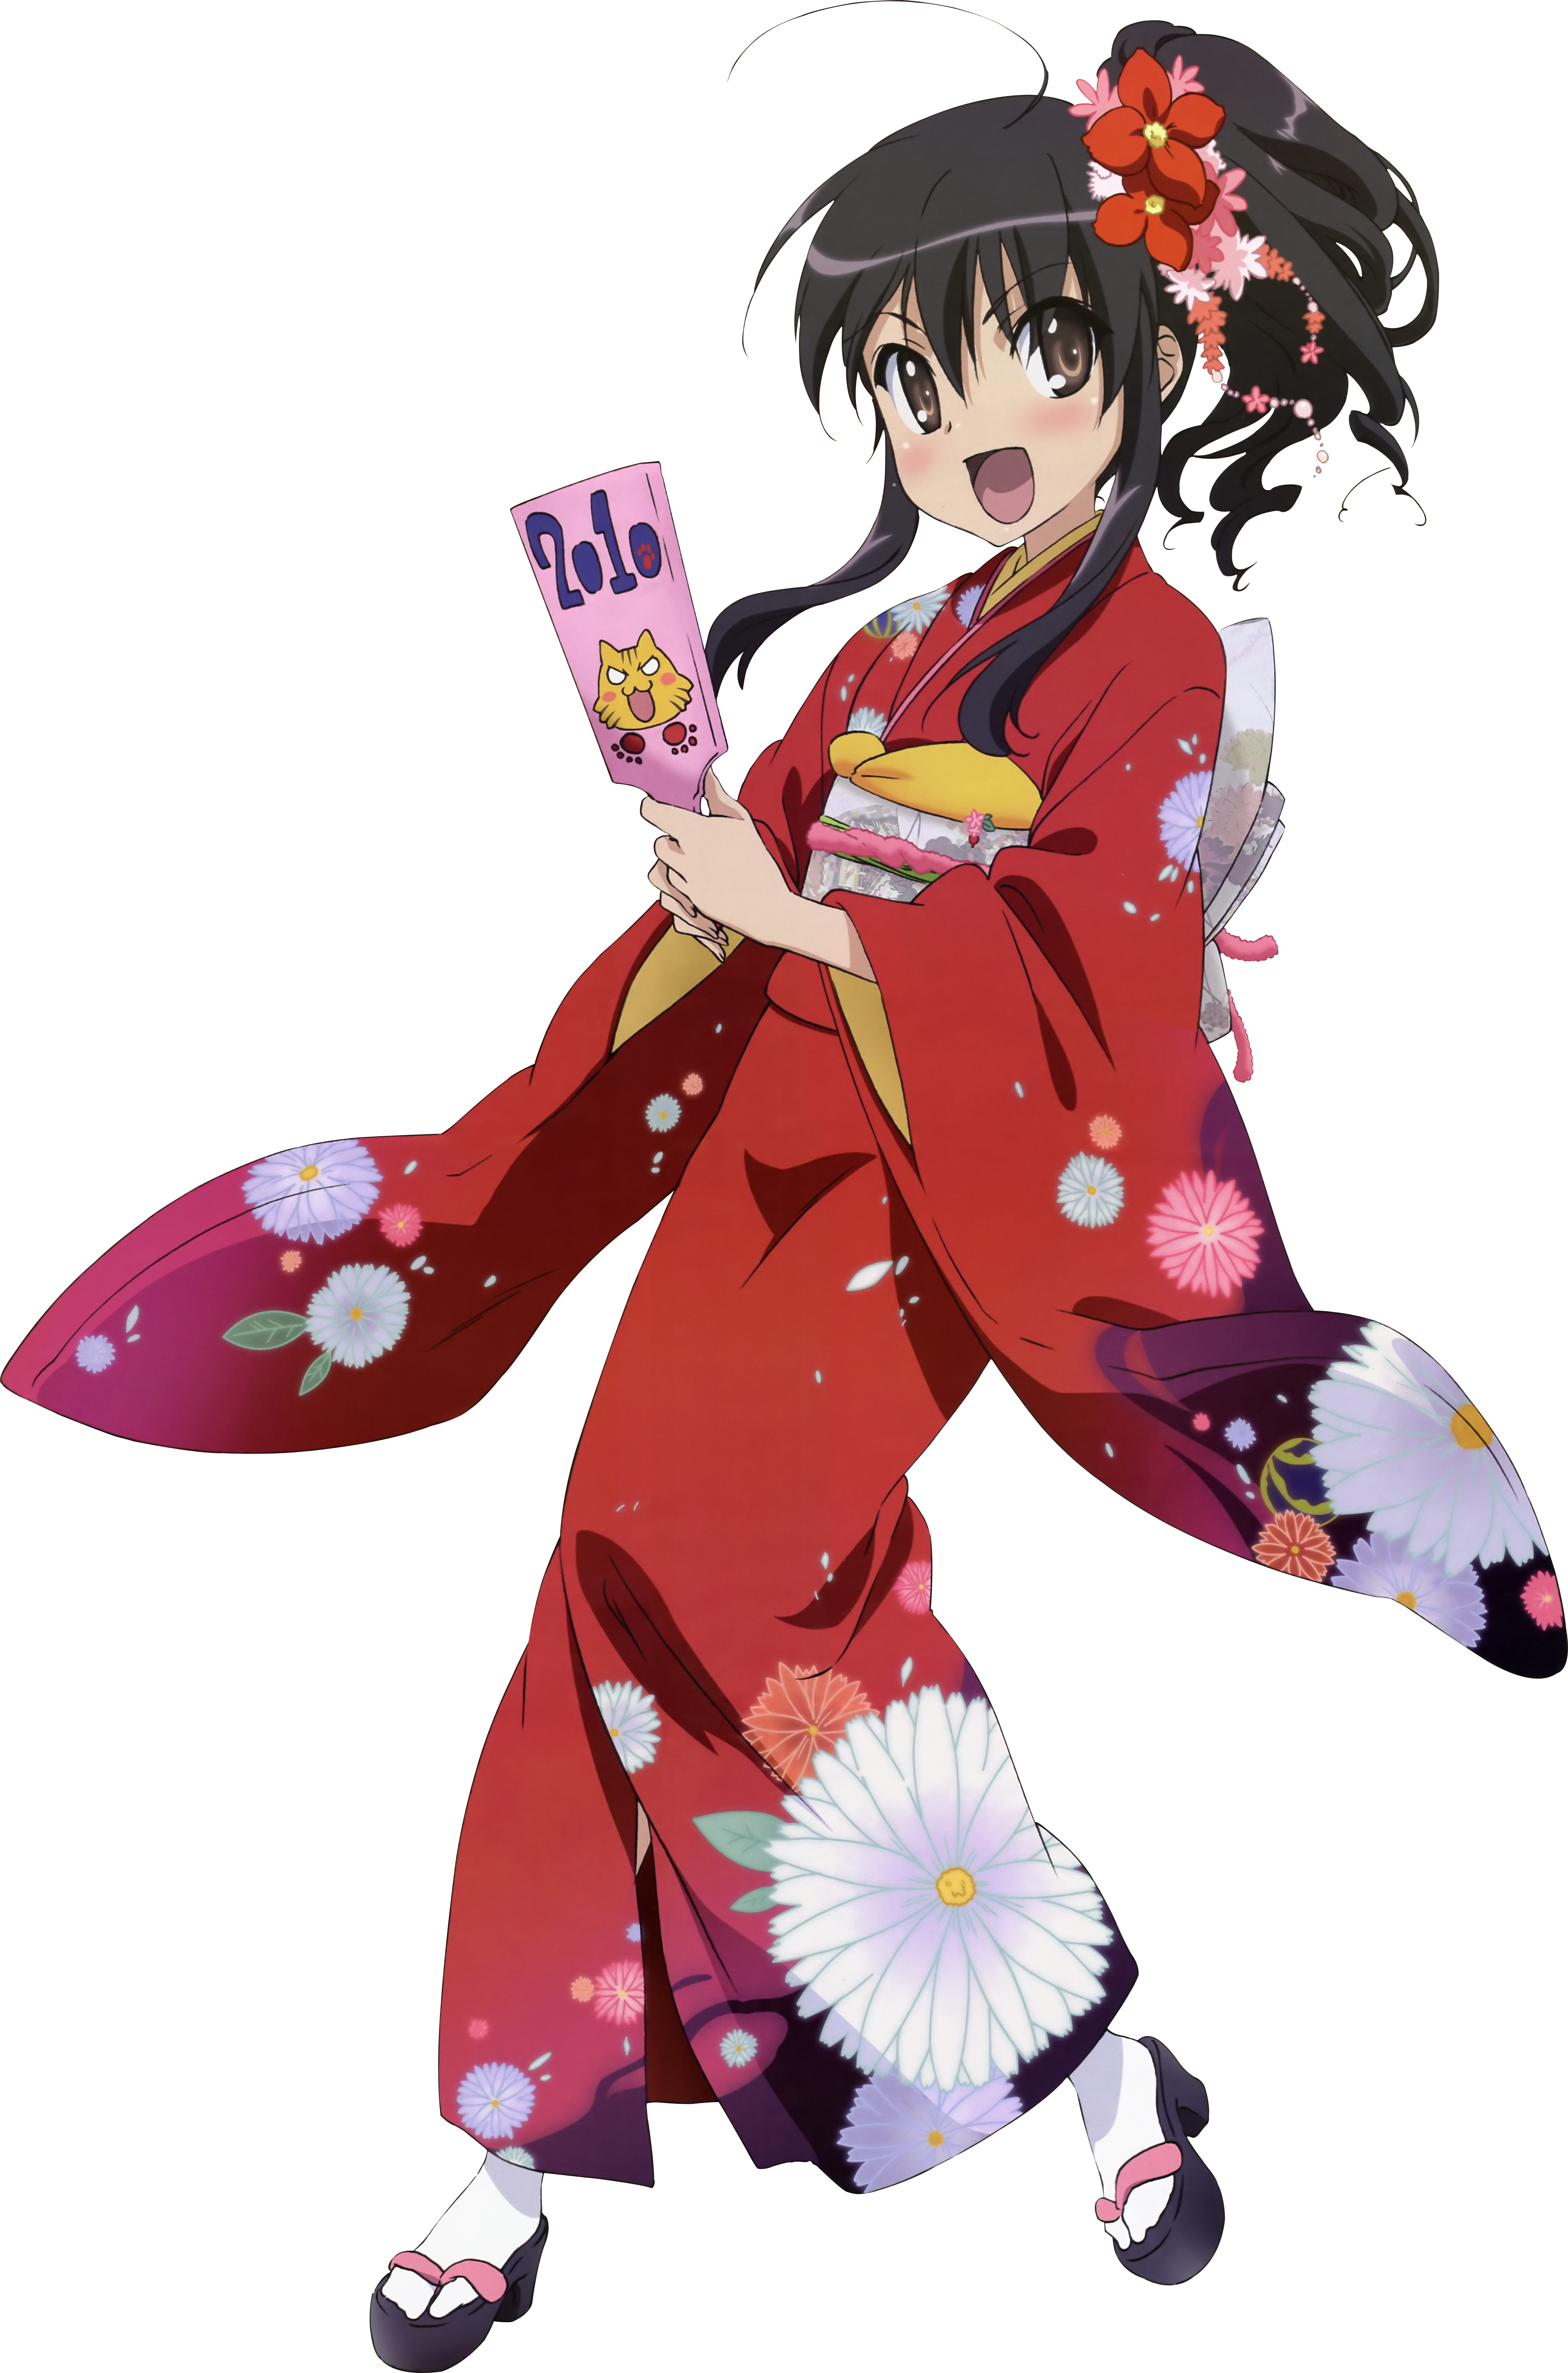 A Cartoon Of A Woman In A Kimono Holding A Fan